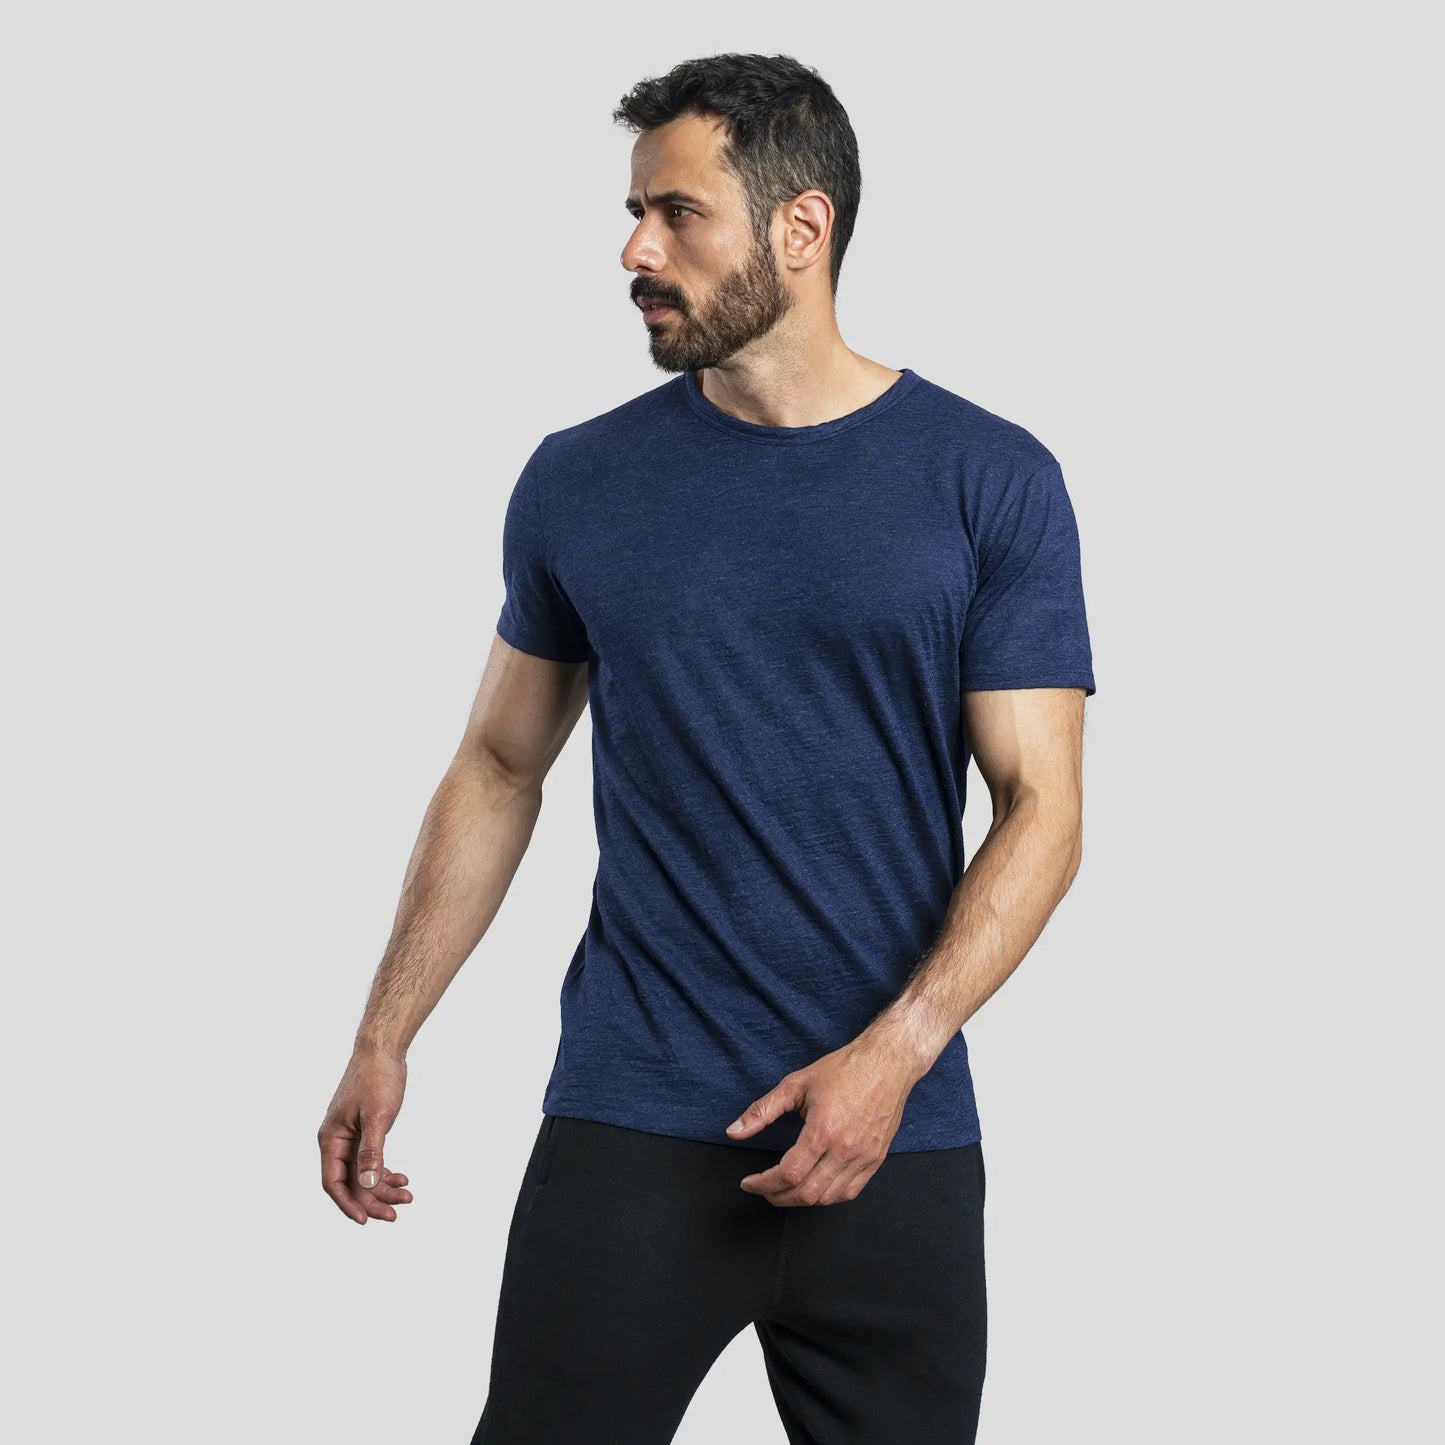 mens ecological tshirt crew neck color navy blue